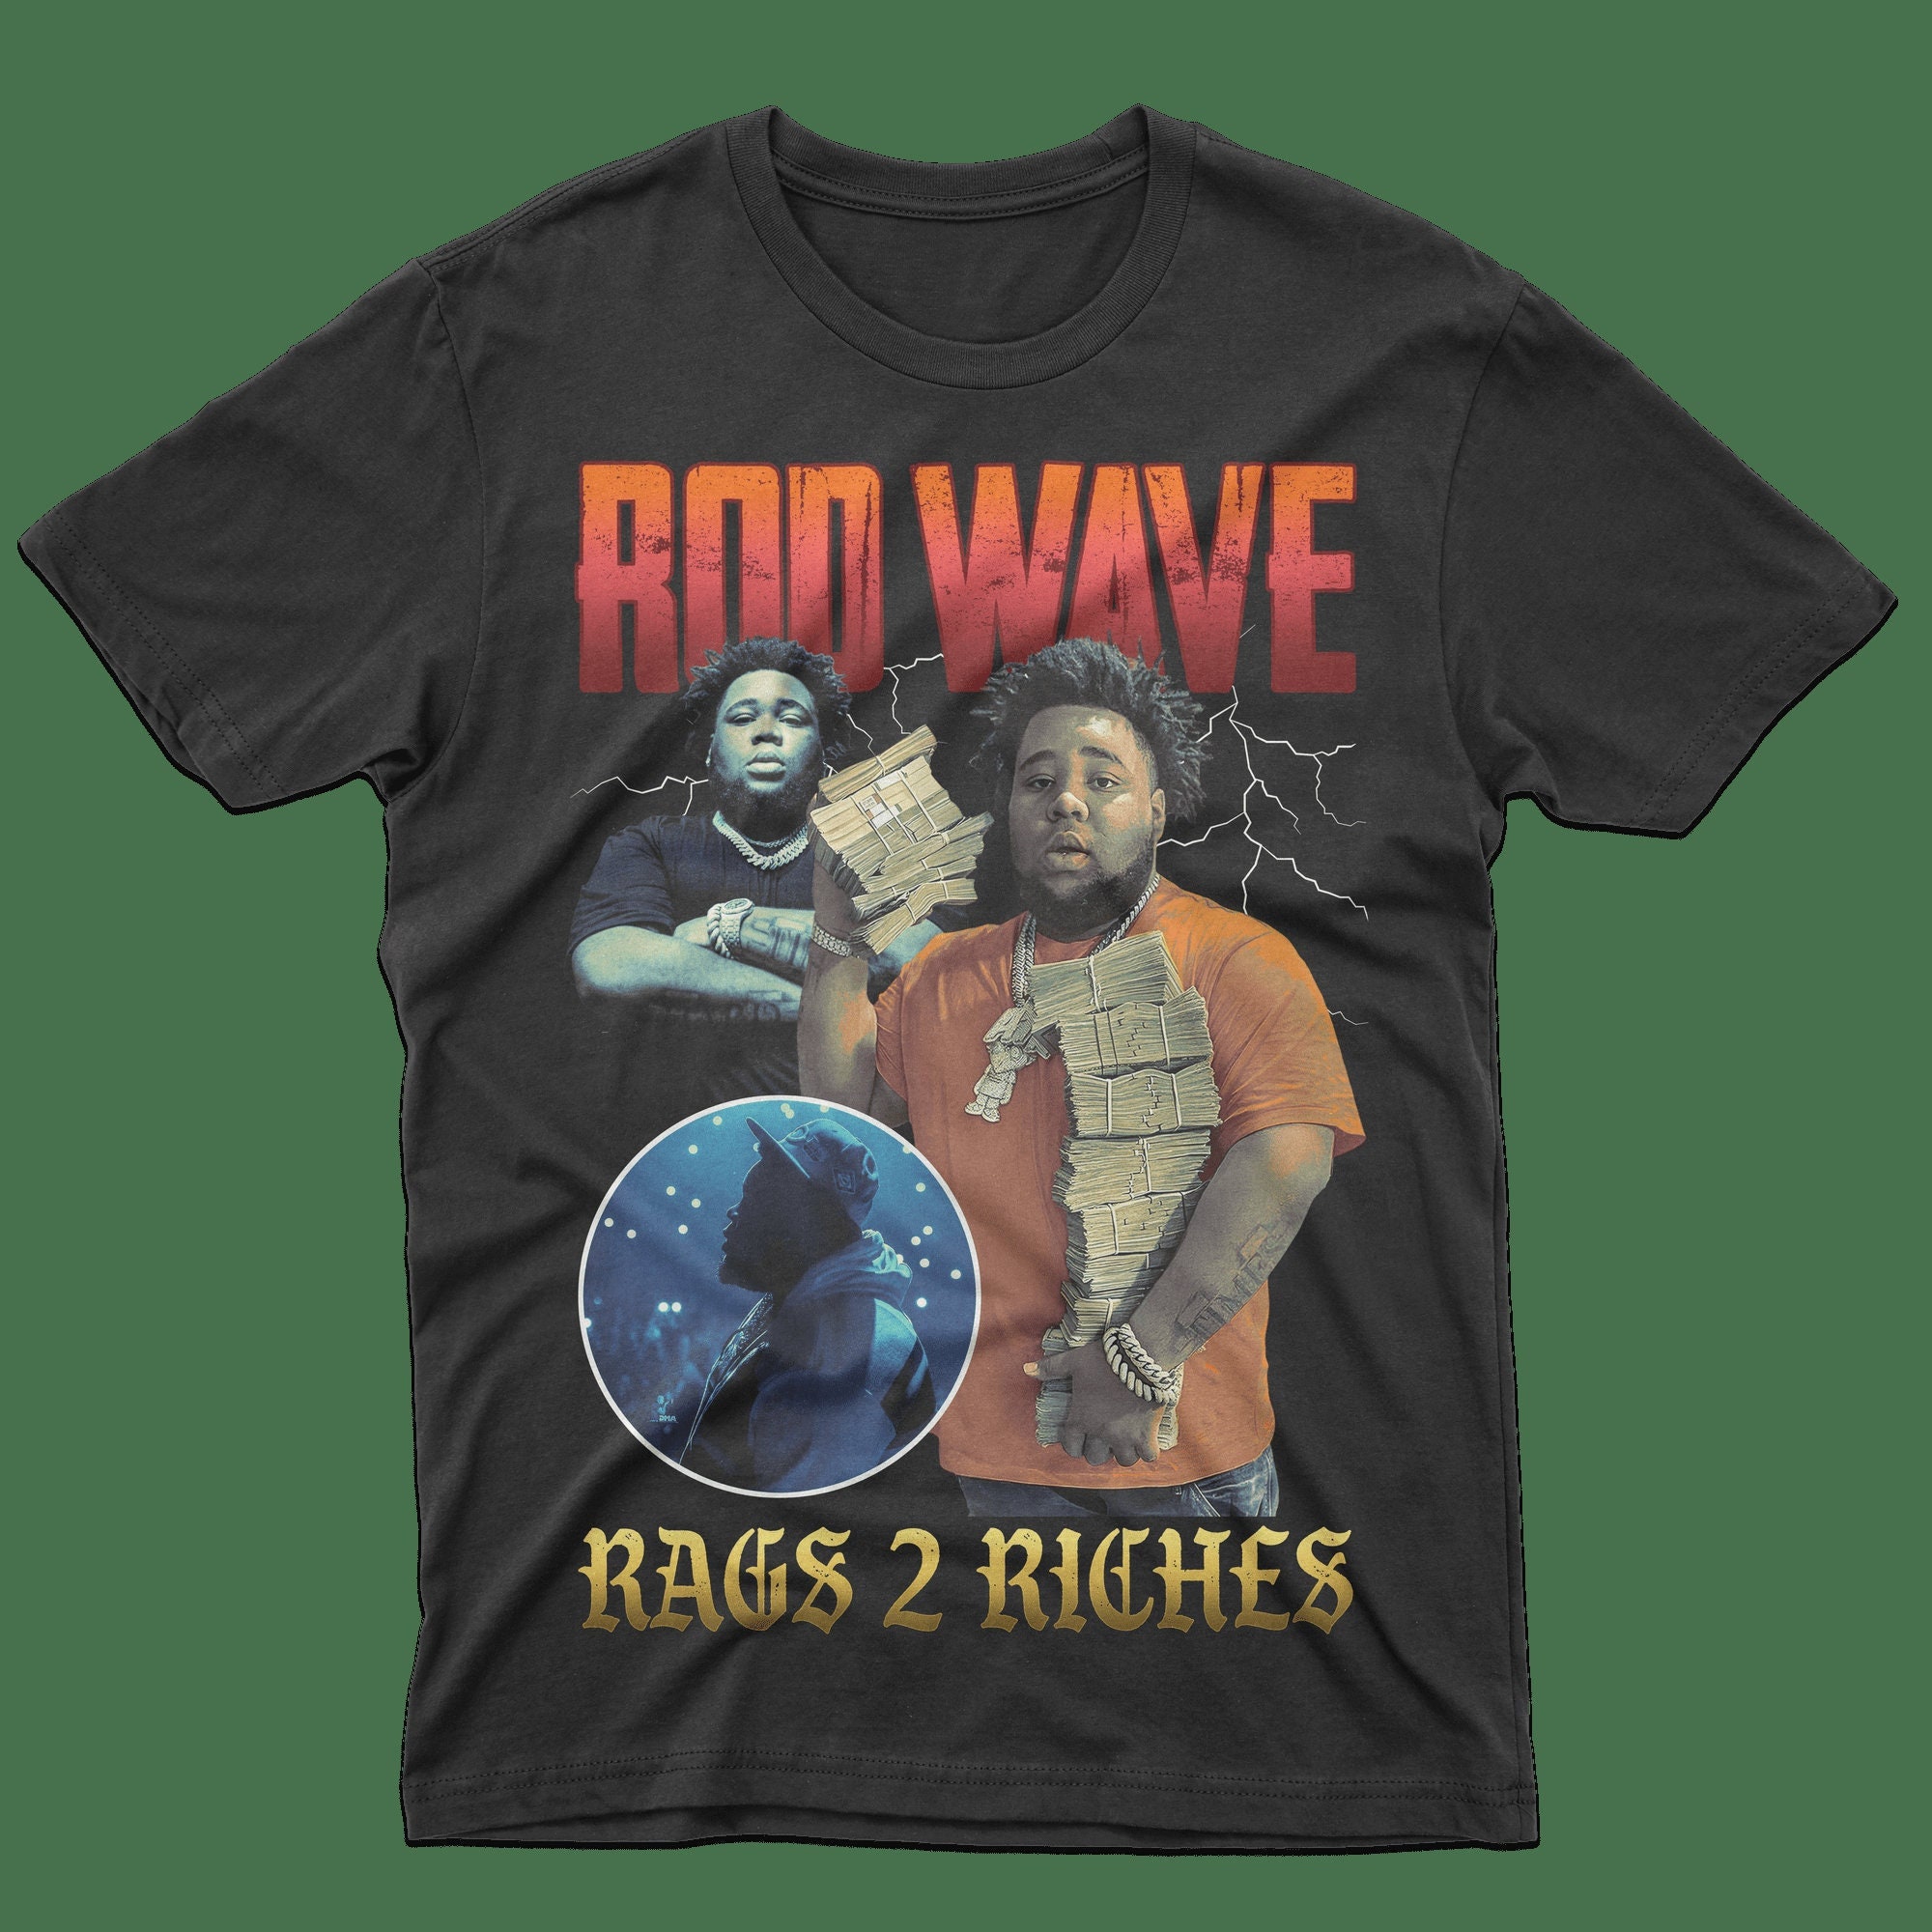 Rod Wave T-shirt, Rod Wave Vintage 90s Shirt, Hip hop RnB Shirt